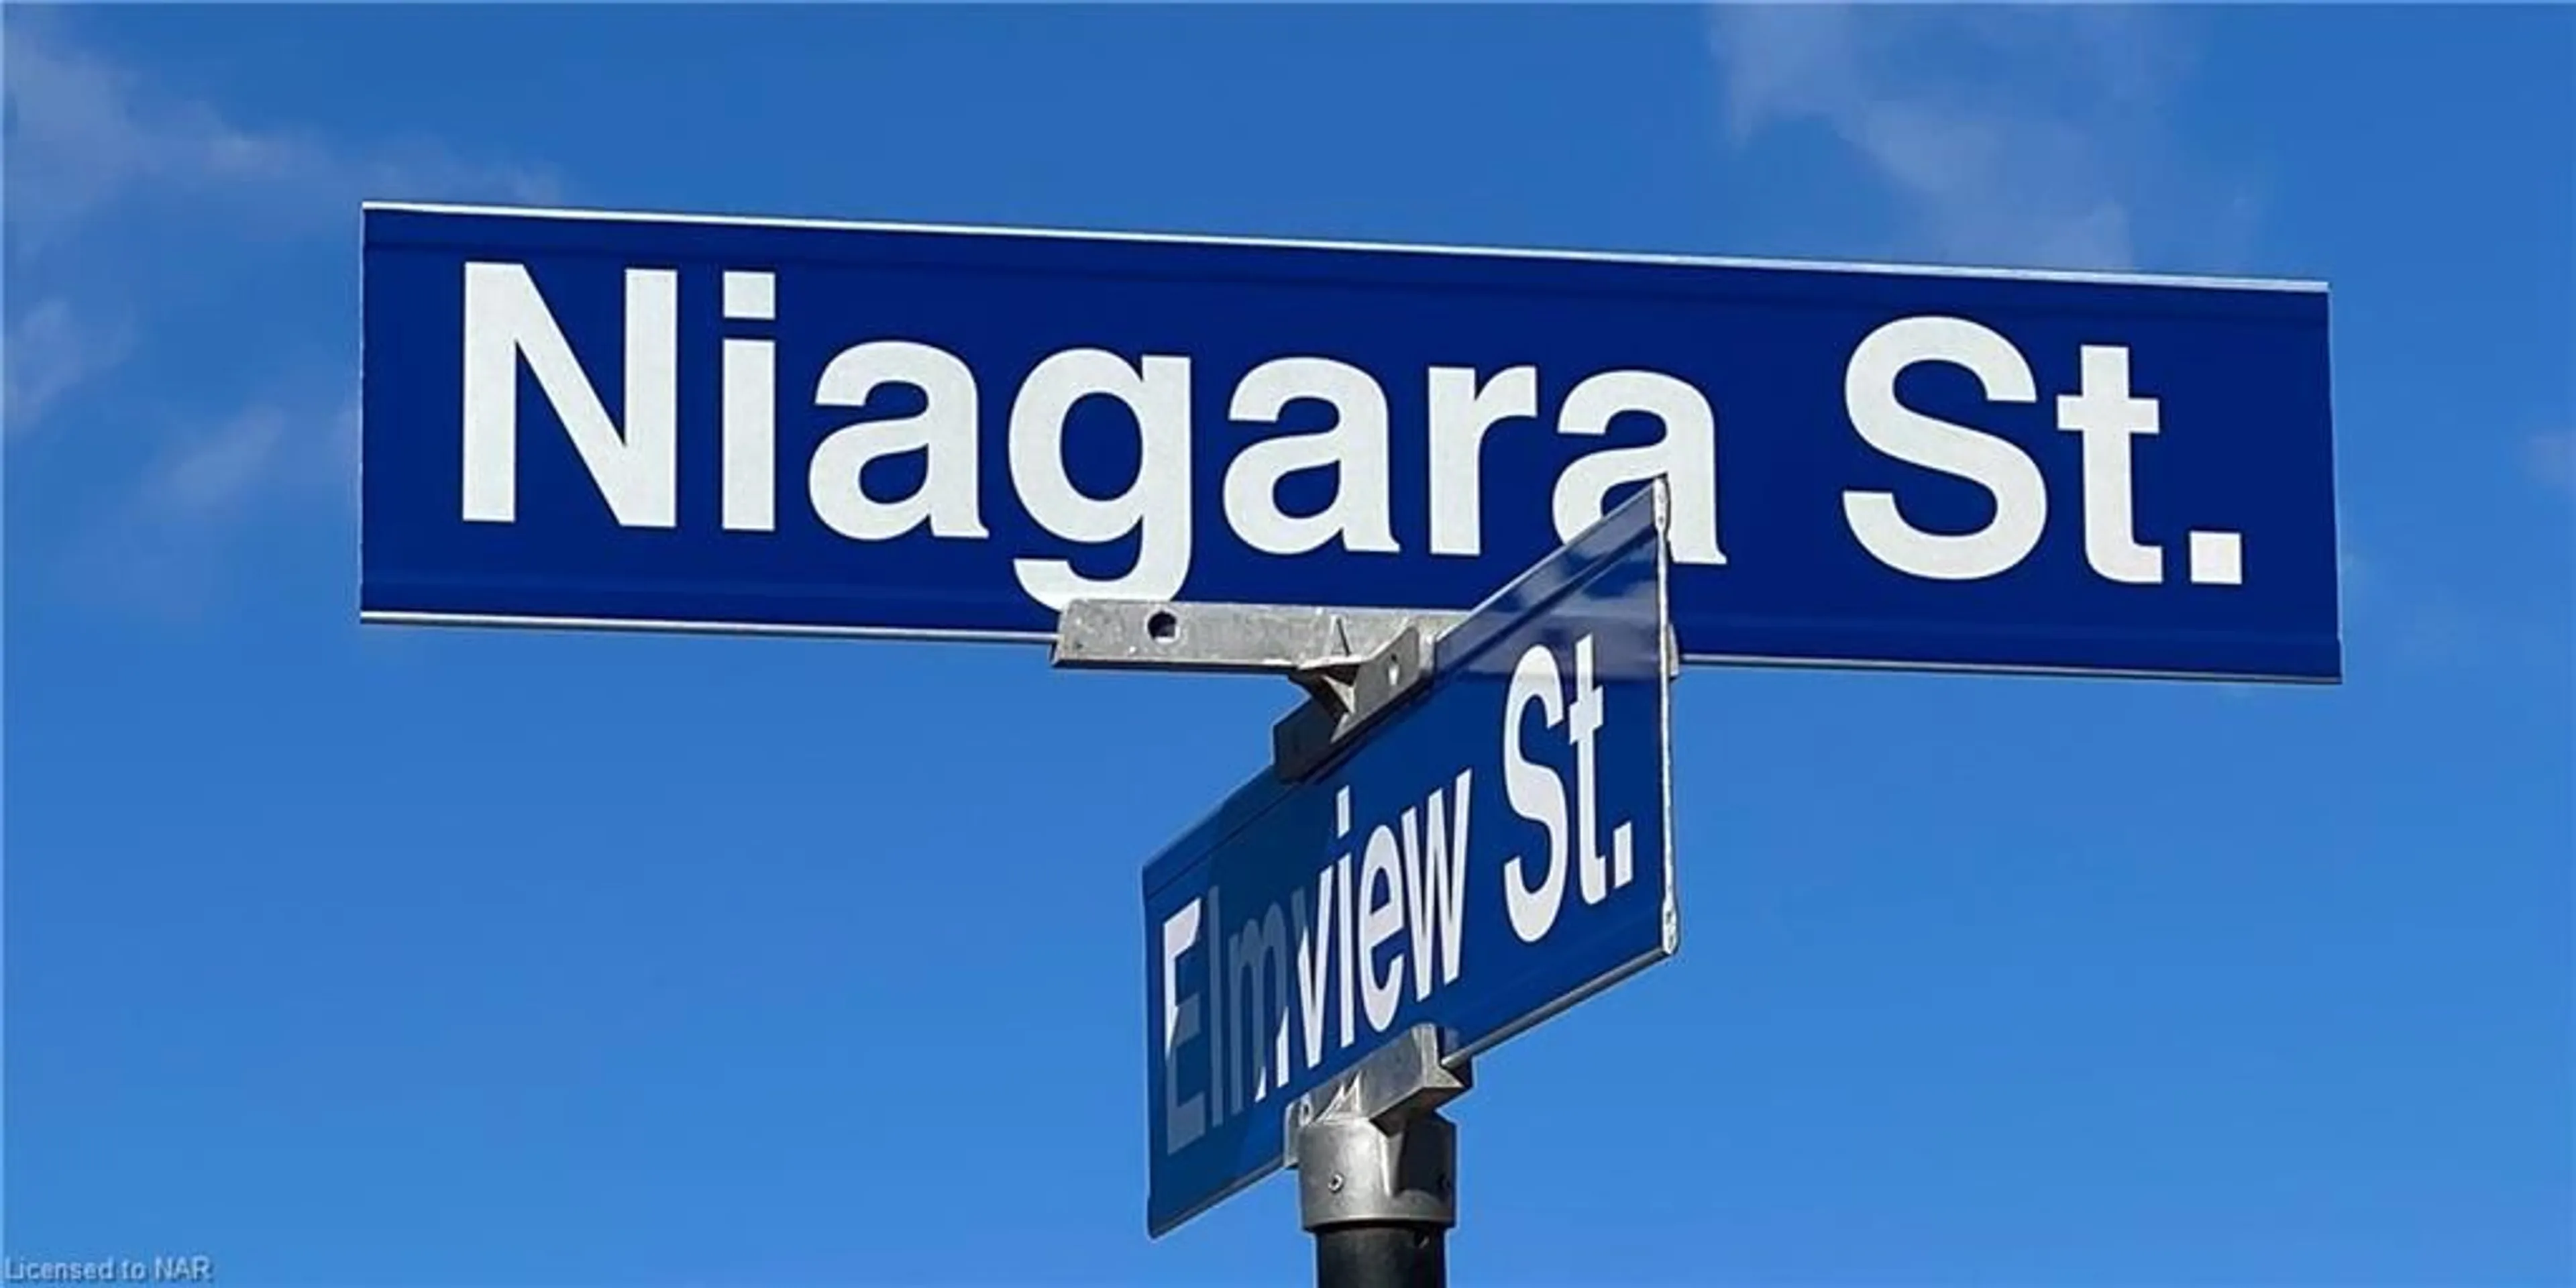 Street view for 281 Niagara St, Welland Ontario L3C 1K5